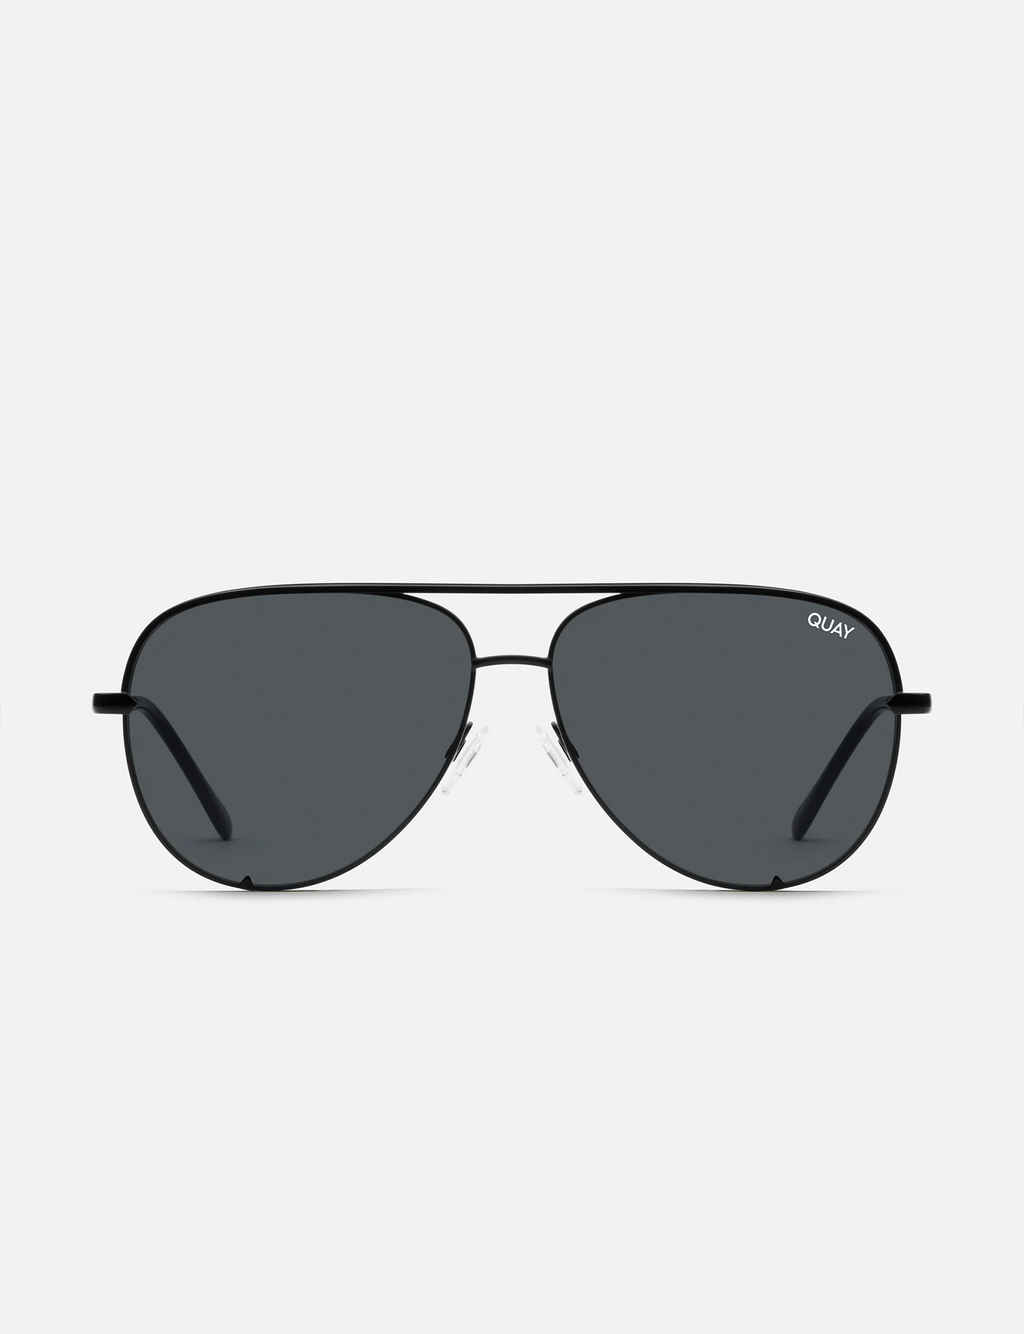 High Key Polarized Sunglasses, Black/Smoke